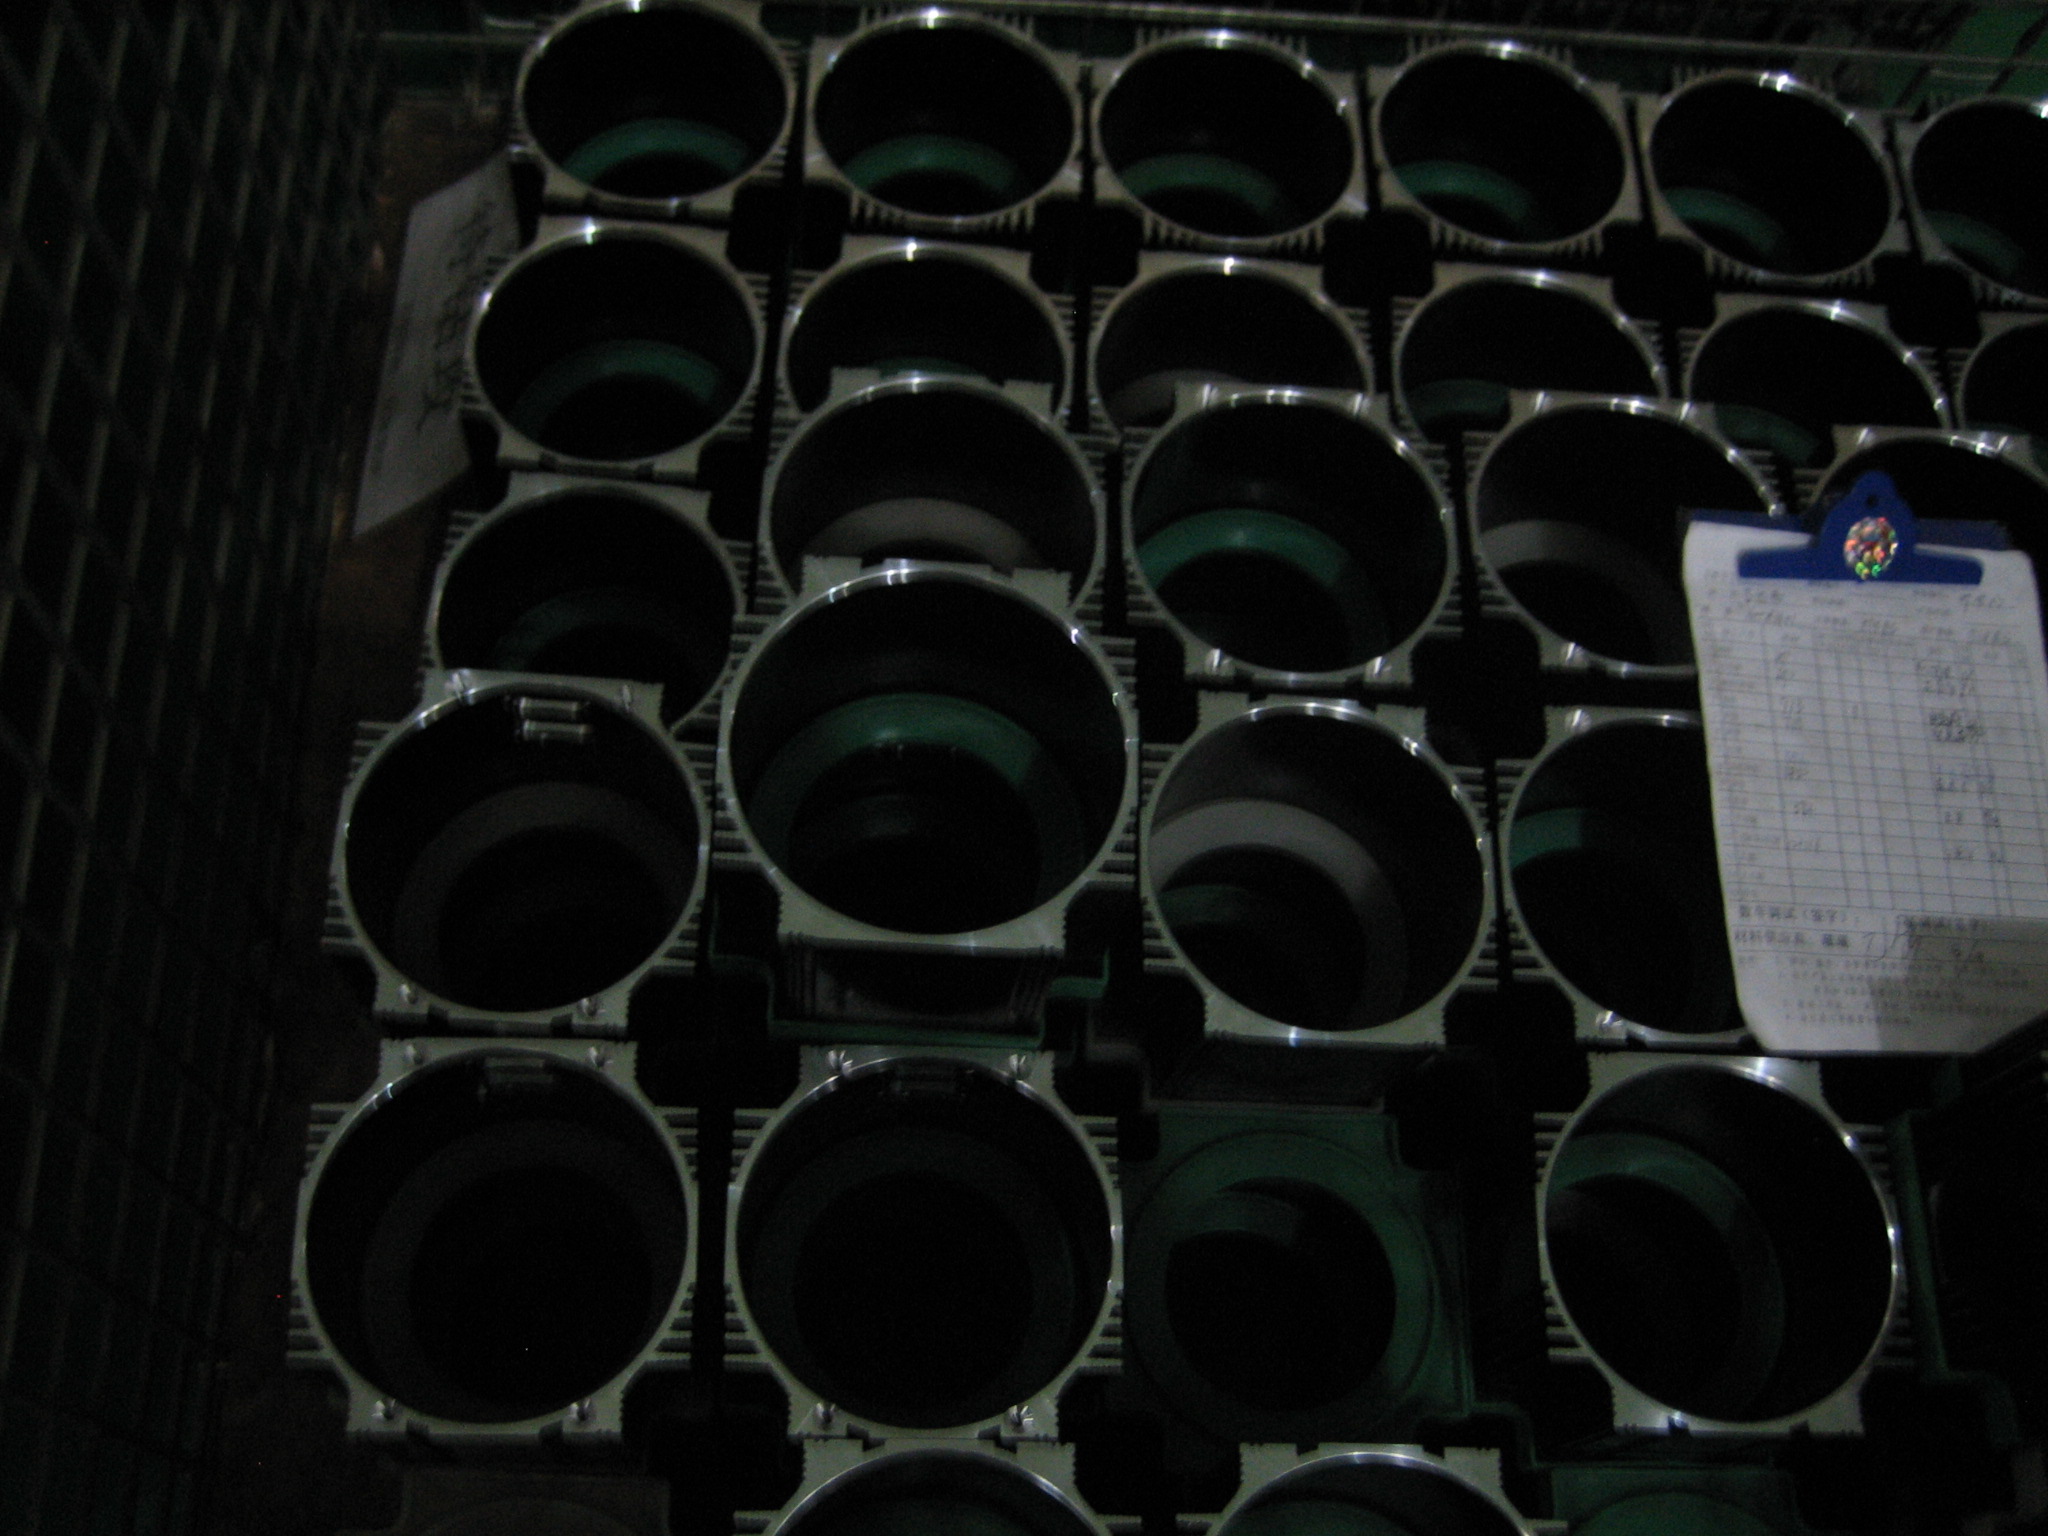 metor shell motor enclosure in workshop